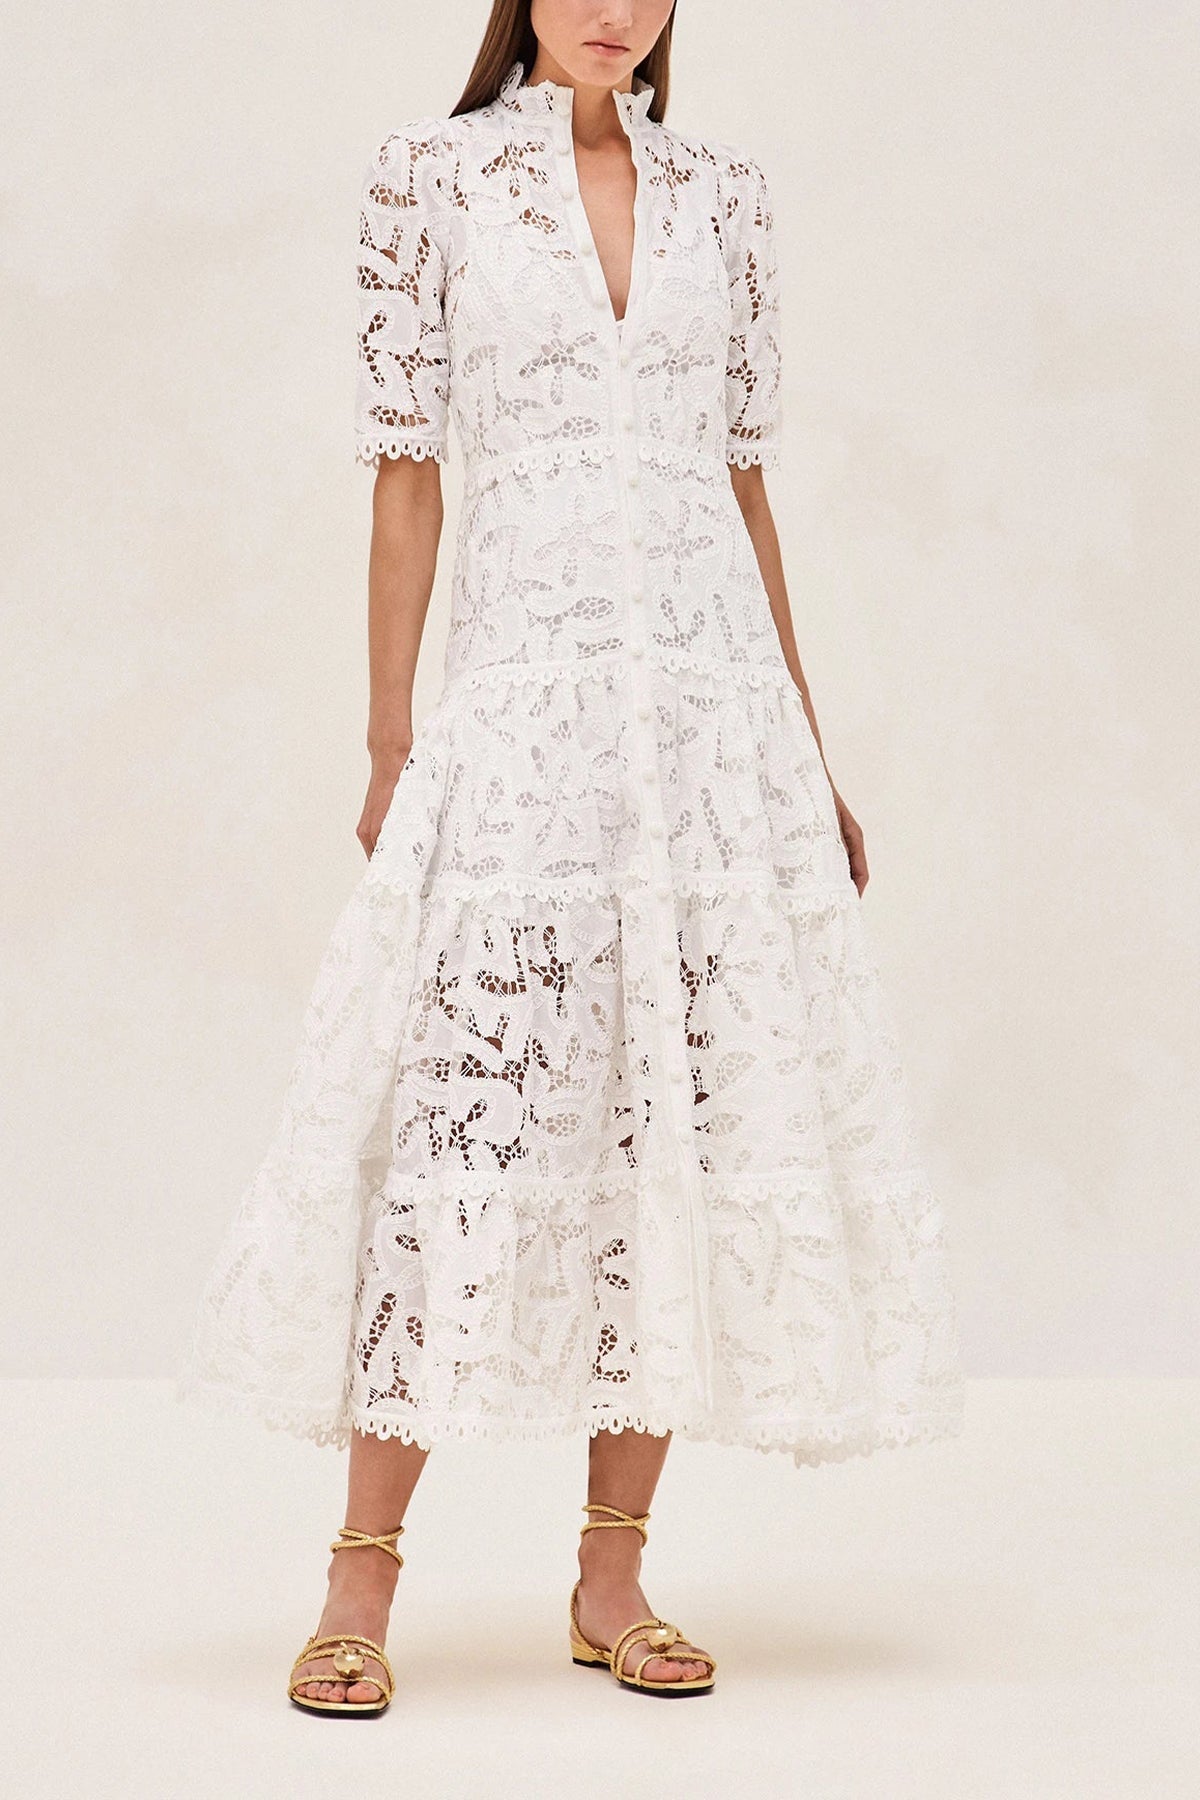 Ledina Dress in White - shop-olivia.com